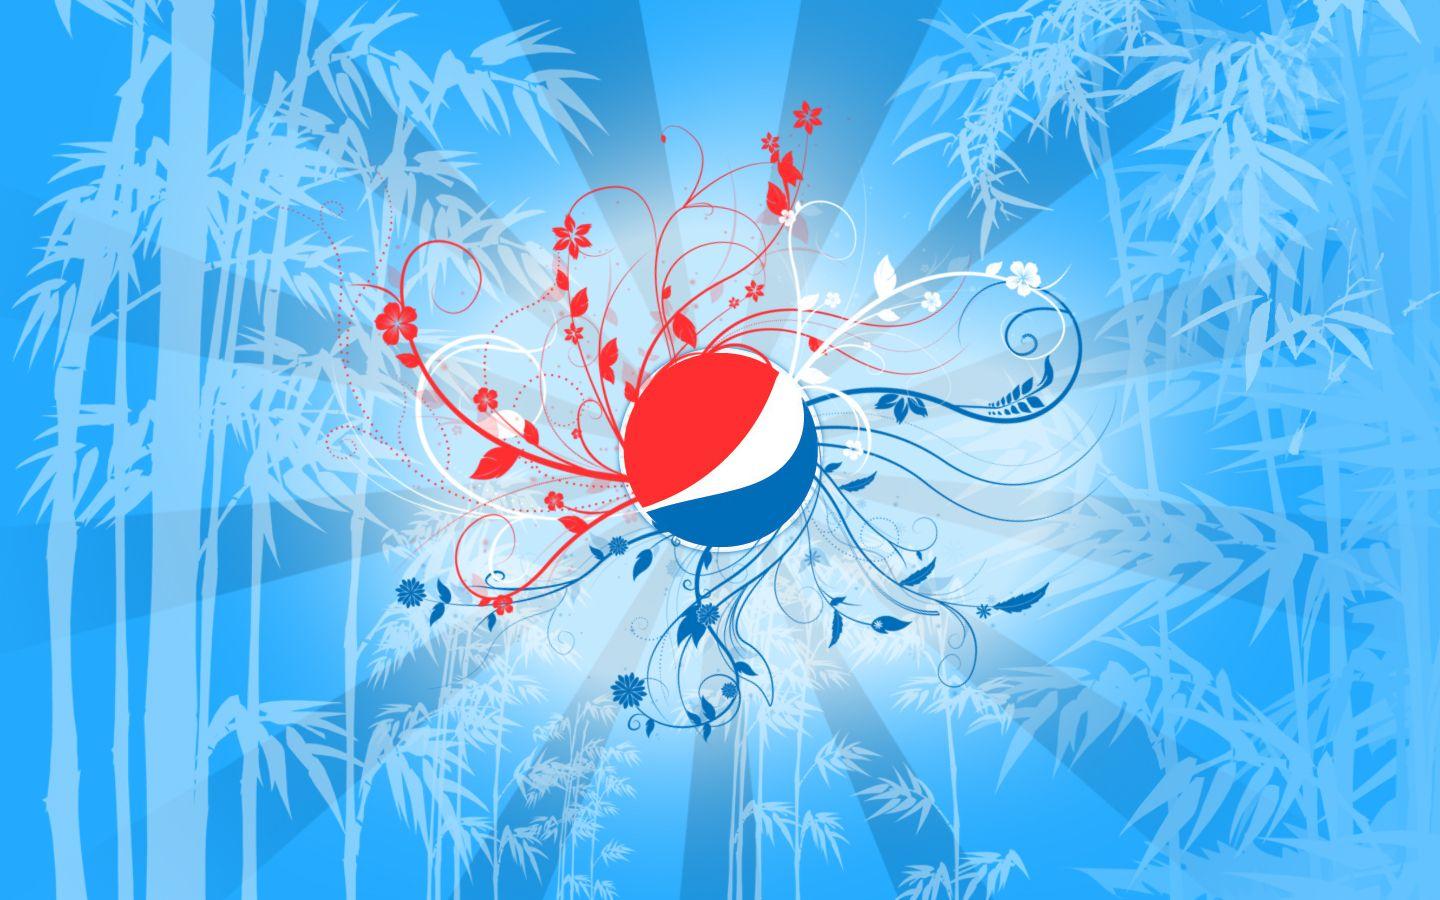 PepsiCo HD Wallpaper, Background Image